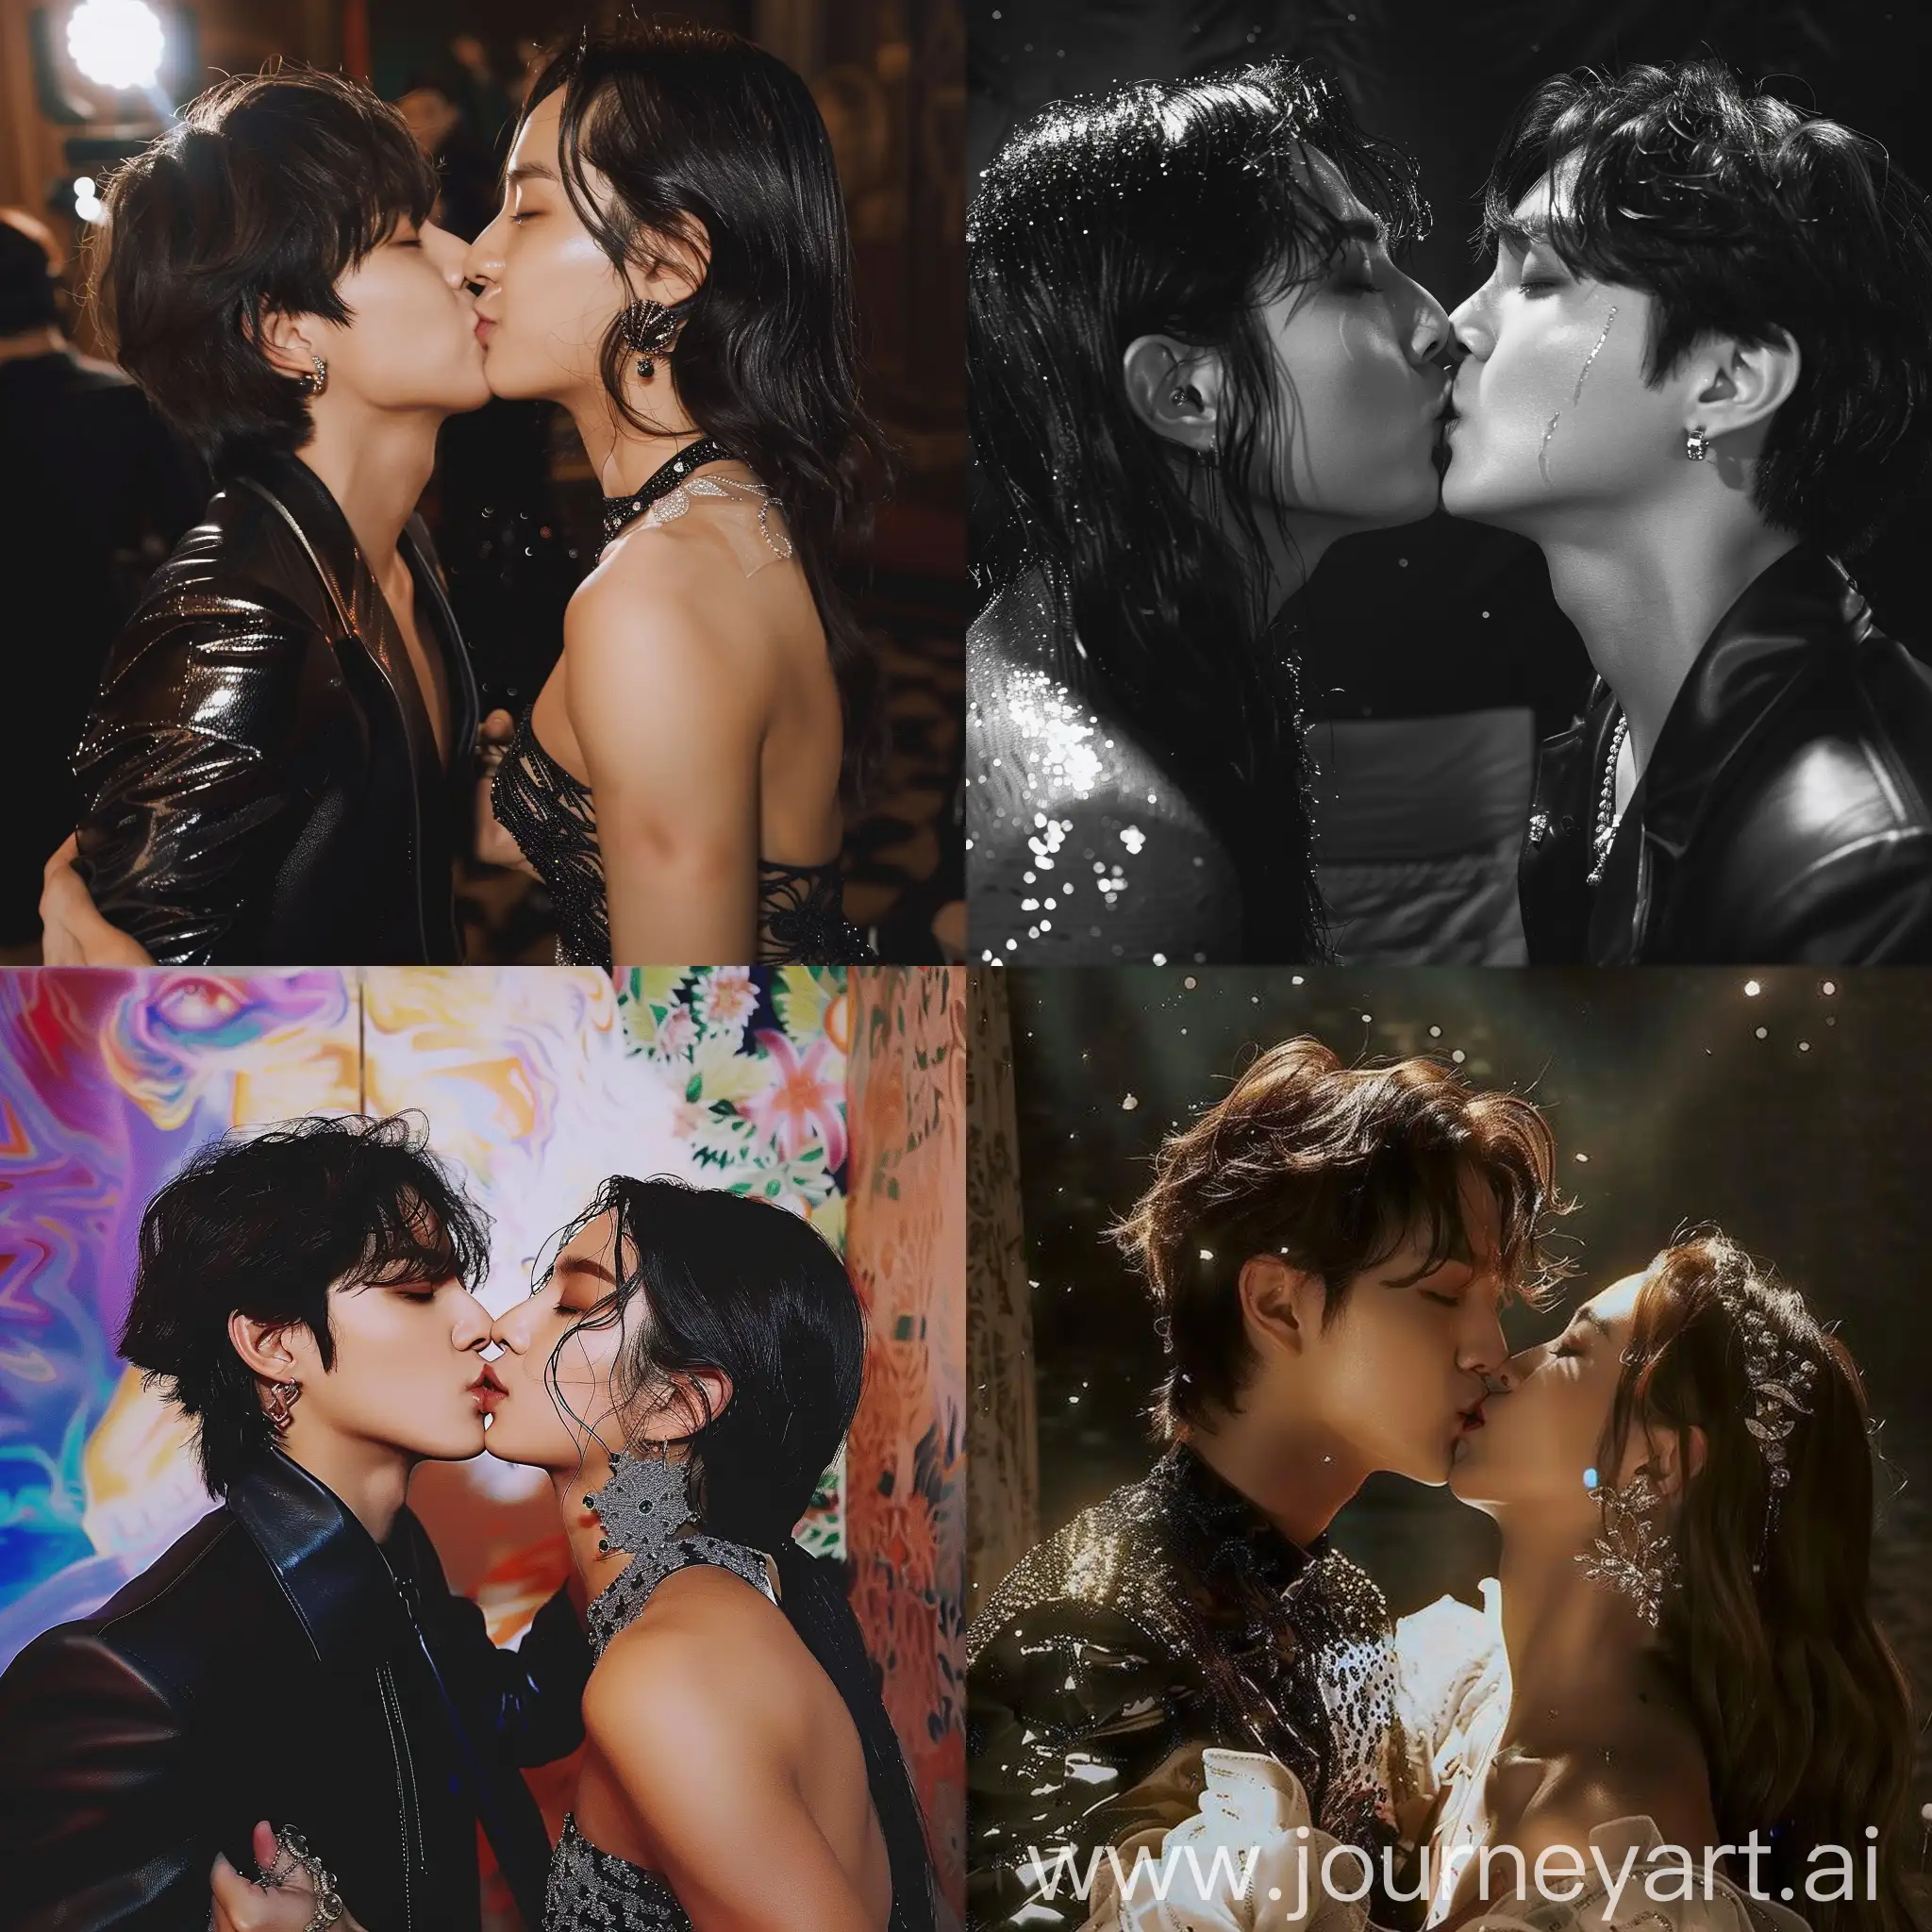 Romantic-Kiss-Between-Kim-Taehyung-and-Lalisa-in-a-11-Aspect-Ratio